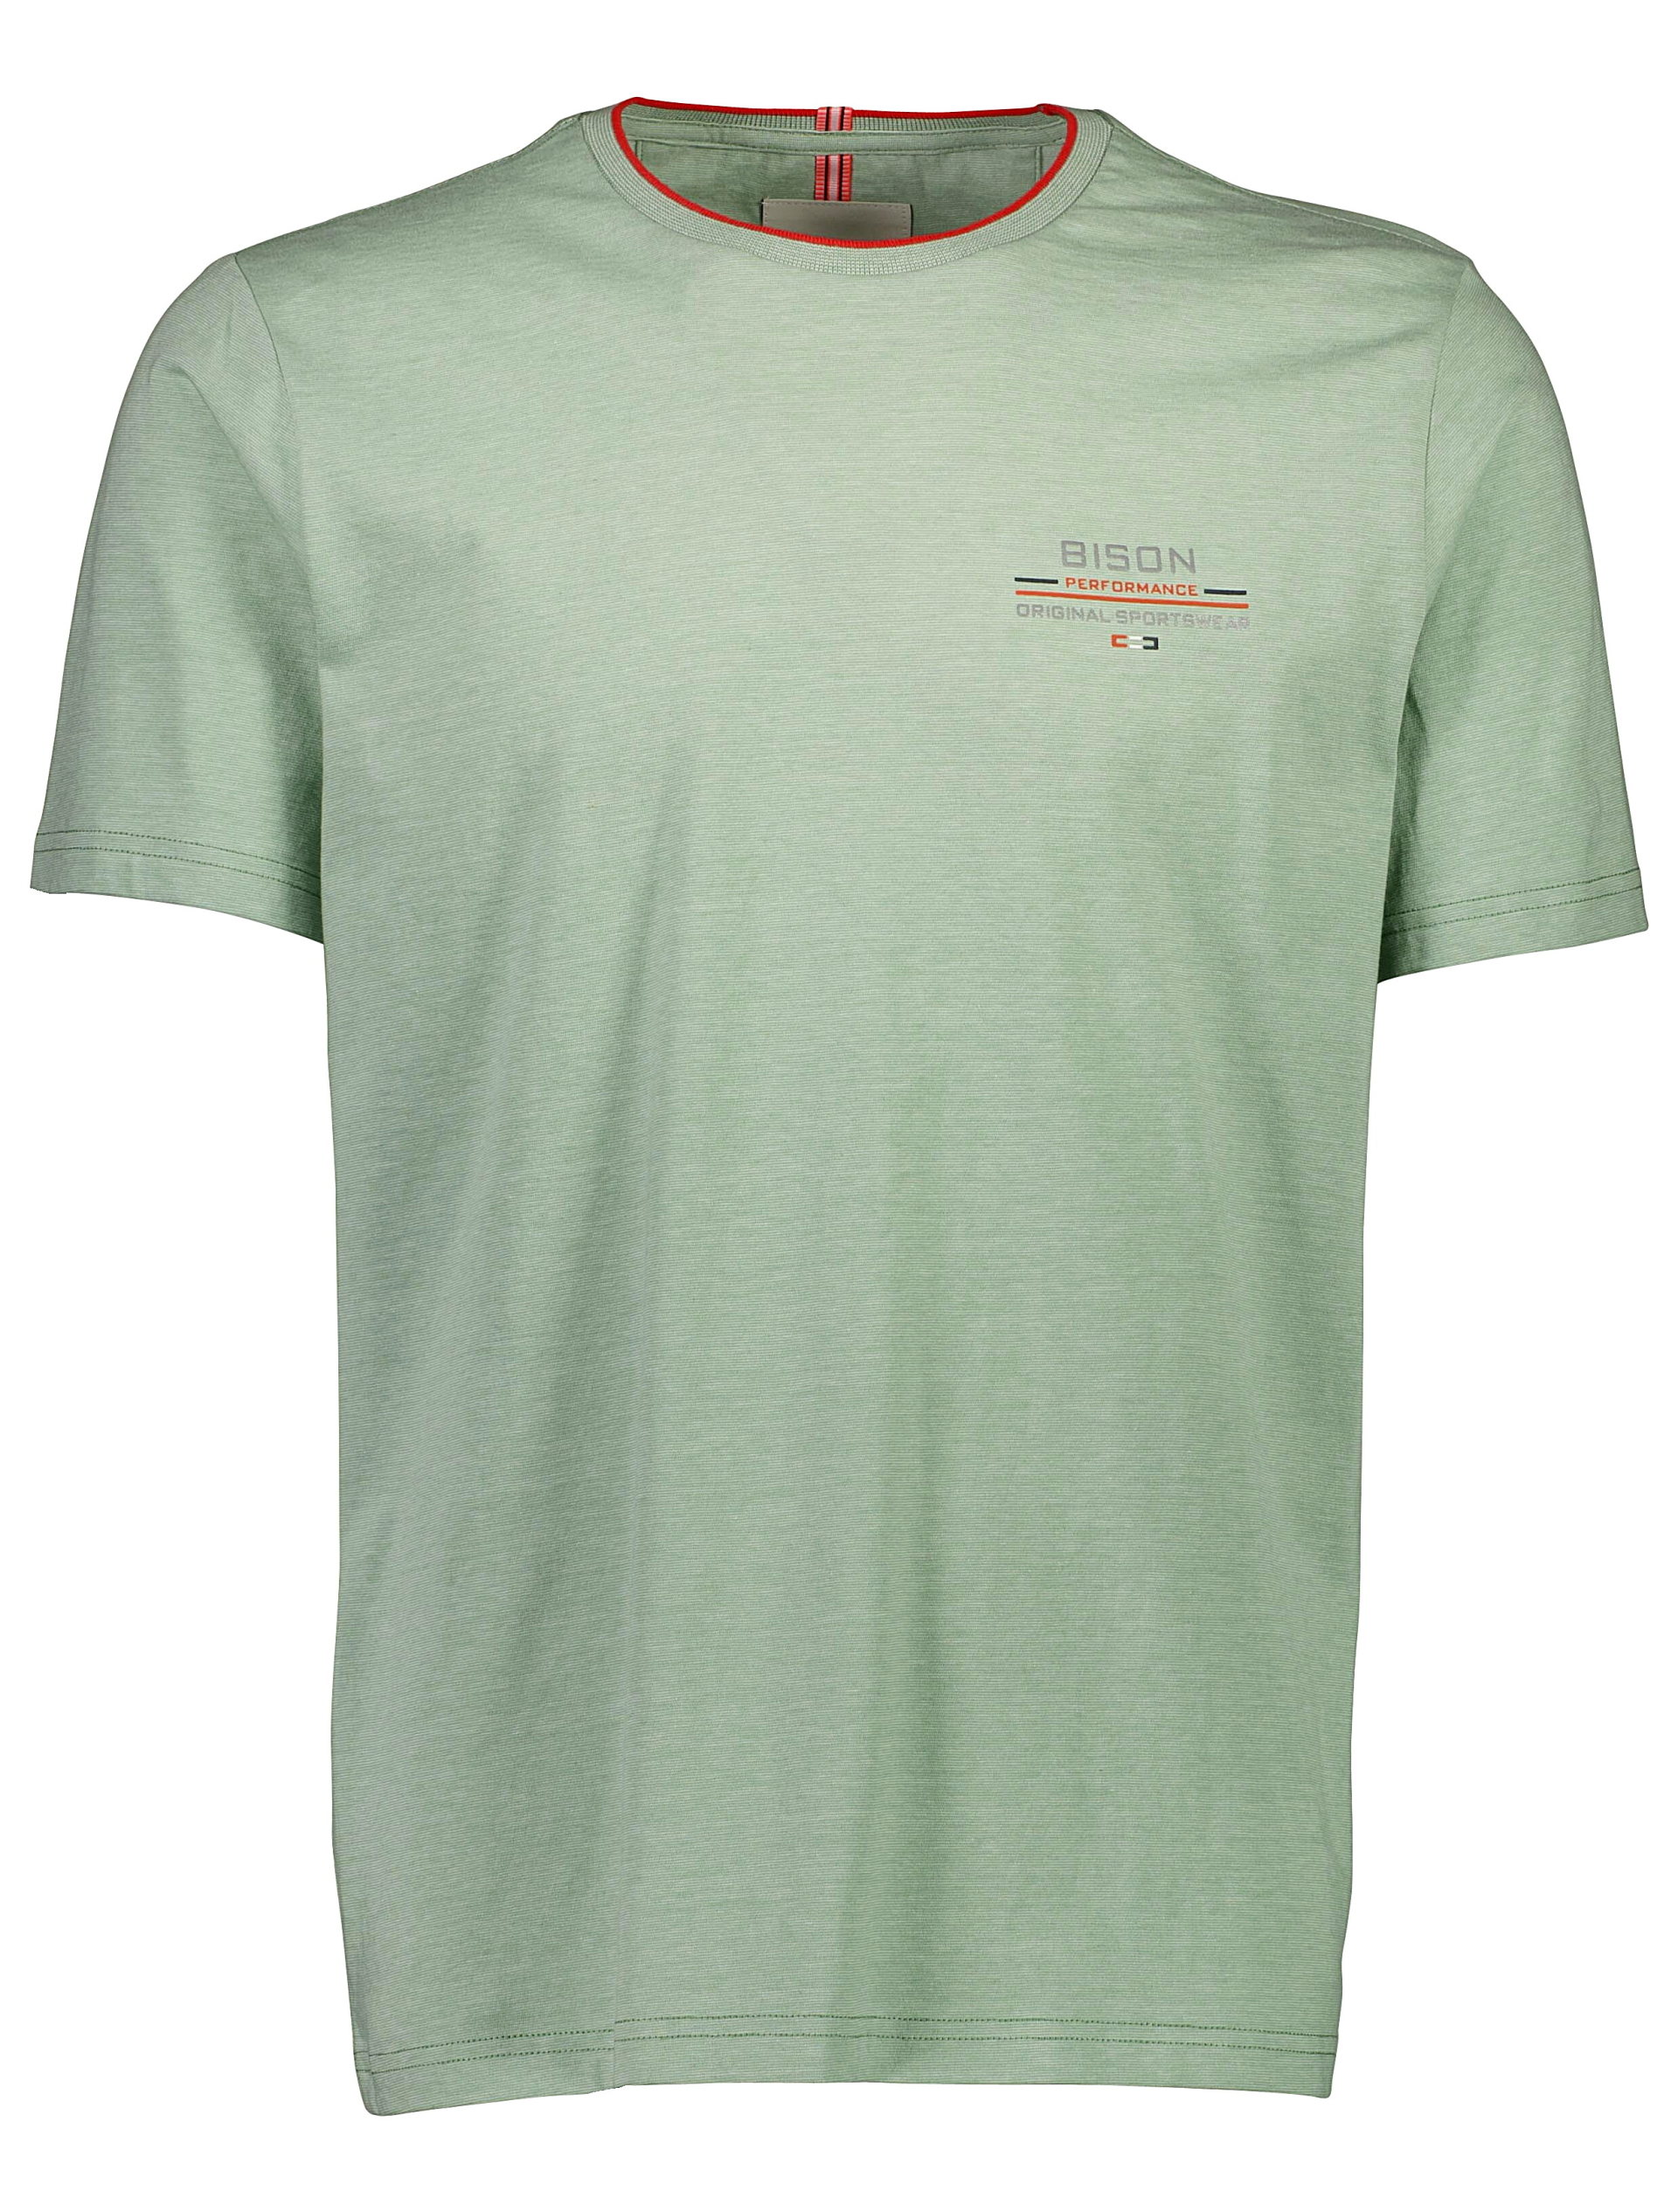 Bison T-shirt grøn / lt green